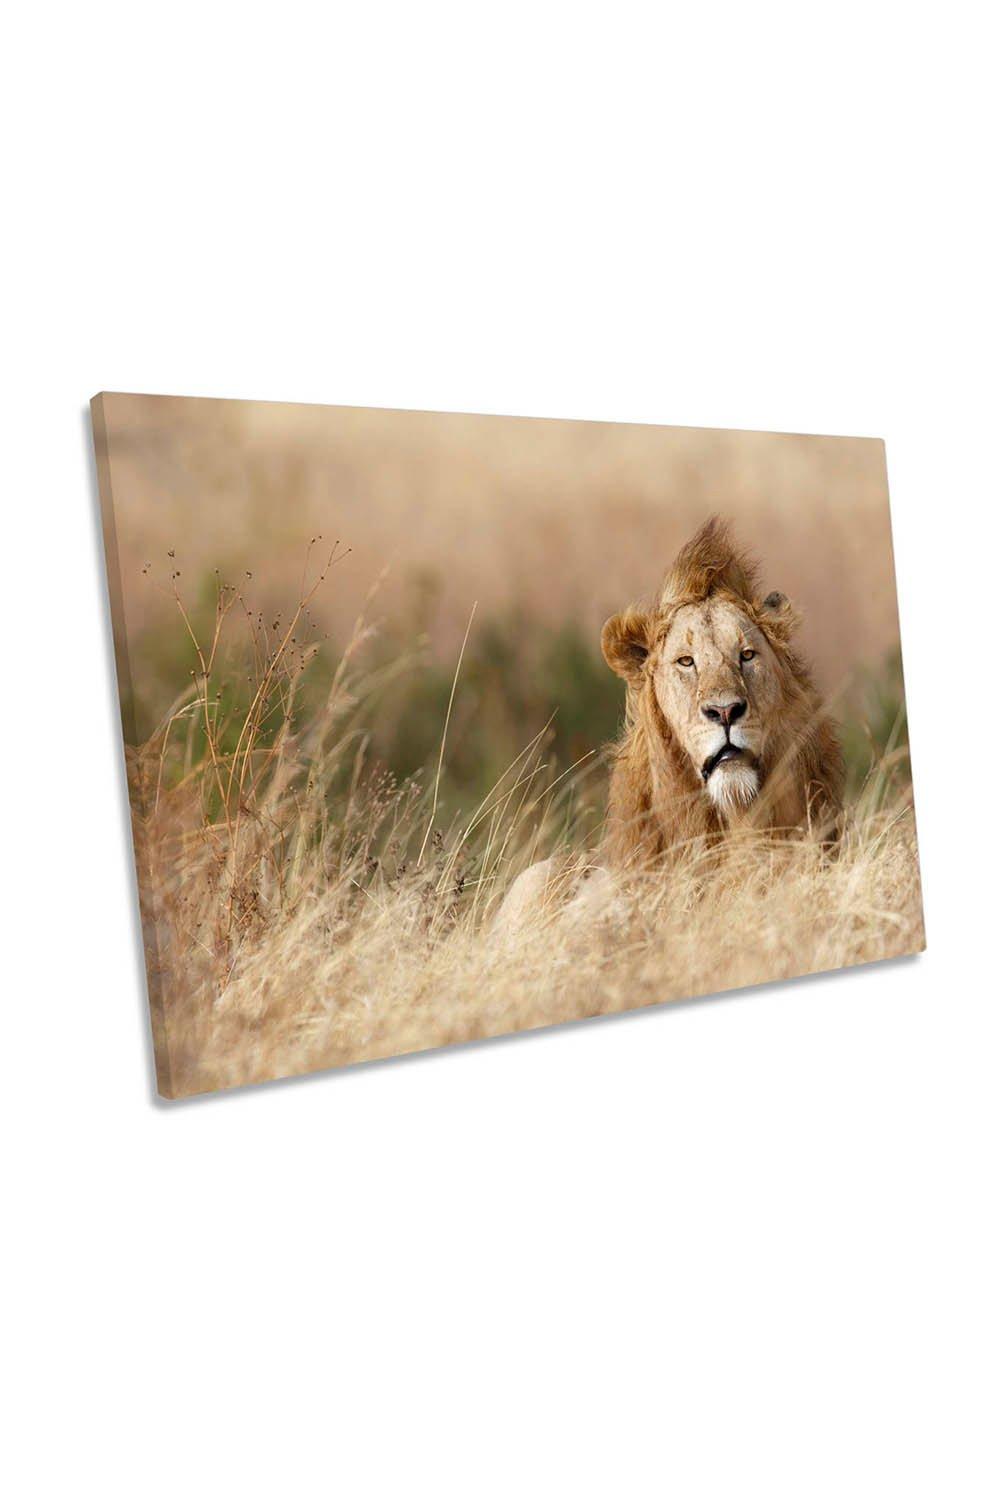 Handsome Lion Wildlife Grass Canvas Wall Art Picture Print